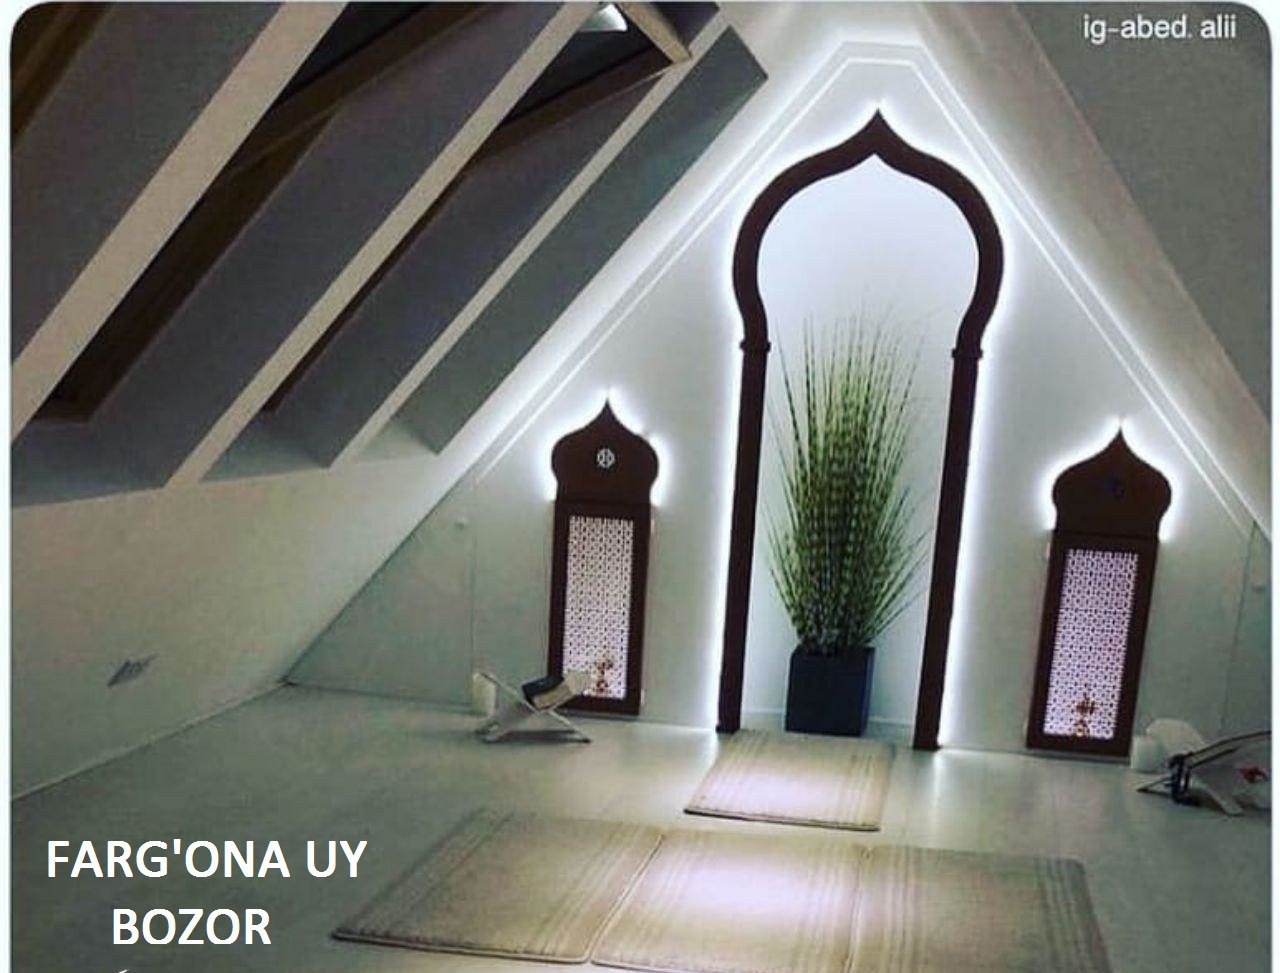 Наджас в исламе. Мусульманская молельная комната. Комната для намаза. Интерьер комнаты для намаза. Молитвенная комната мусульман.